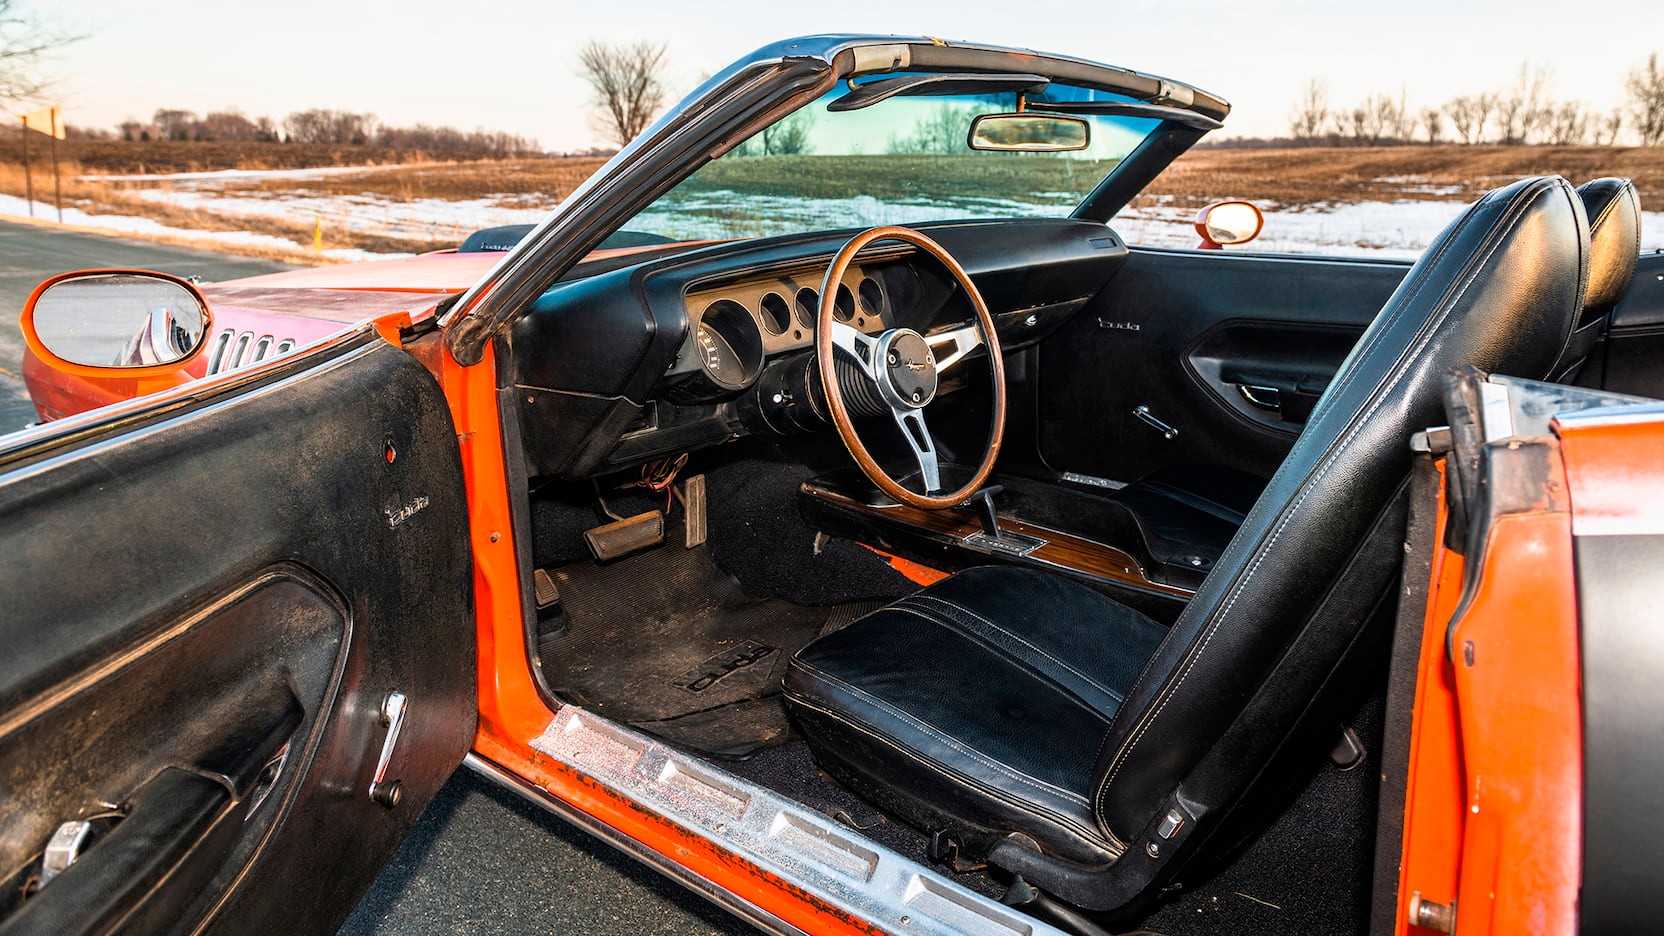 Ржавый американский авто 70-х продают по цене двух Lamborghini